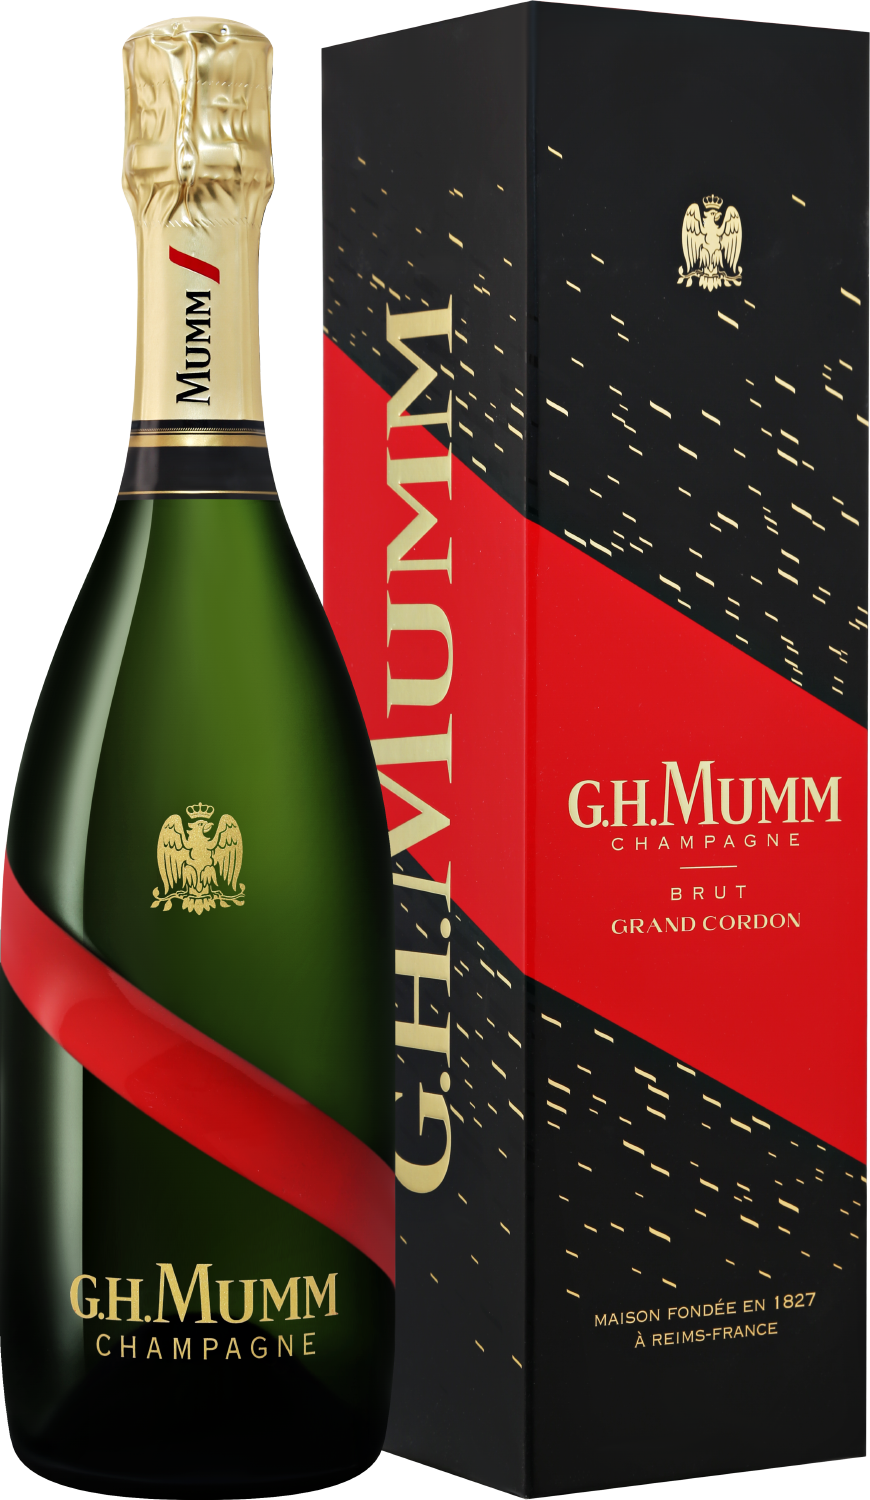 G.H. Mumm Grand Cordon Champagne AOC Brut (gift box) mailly grand cru brut reserve champagne aoc gift box